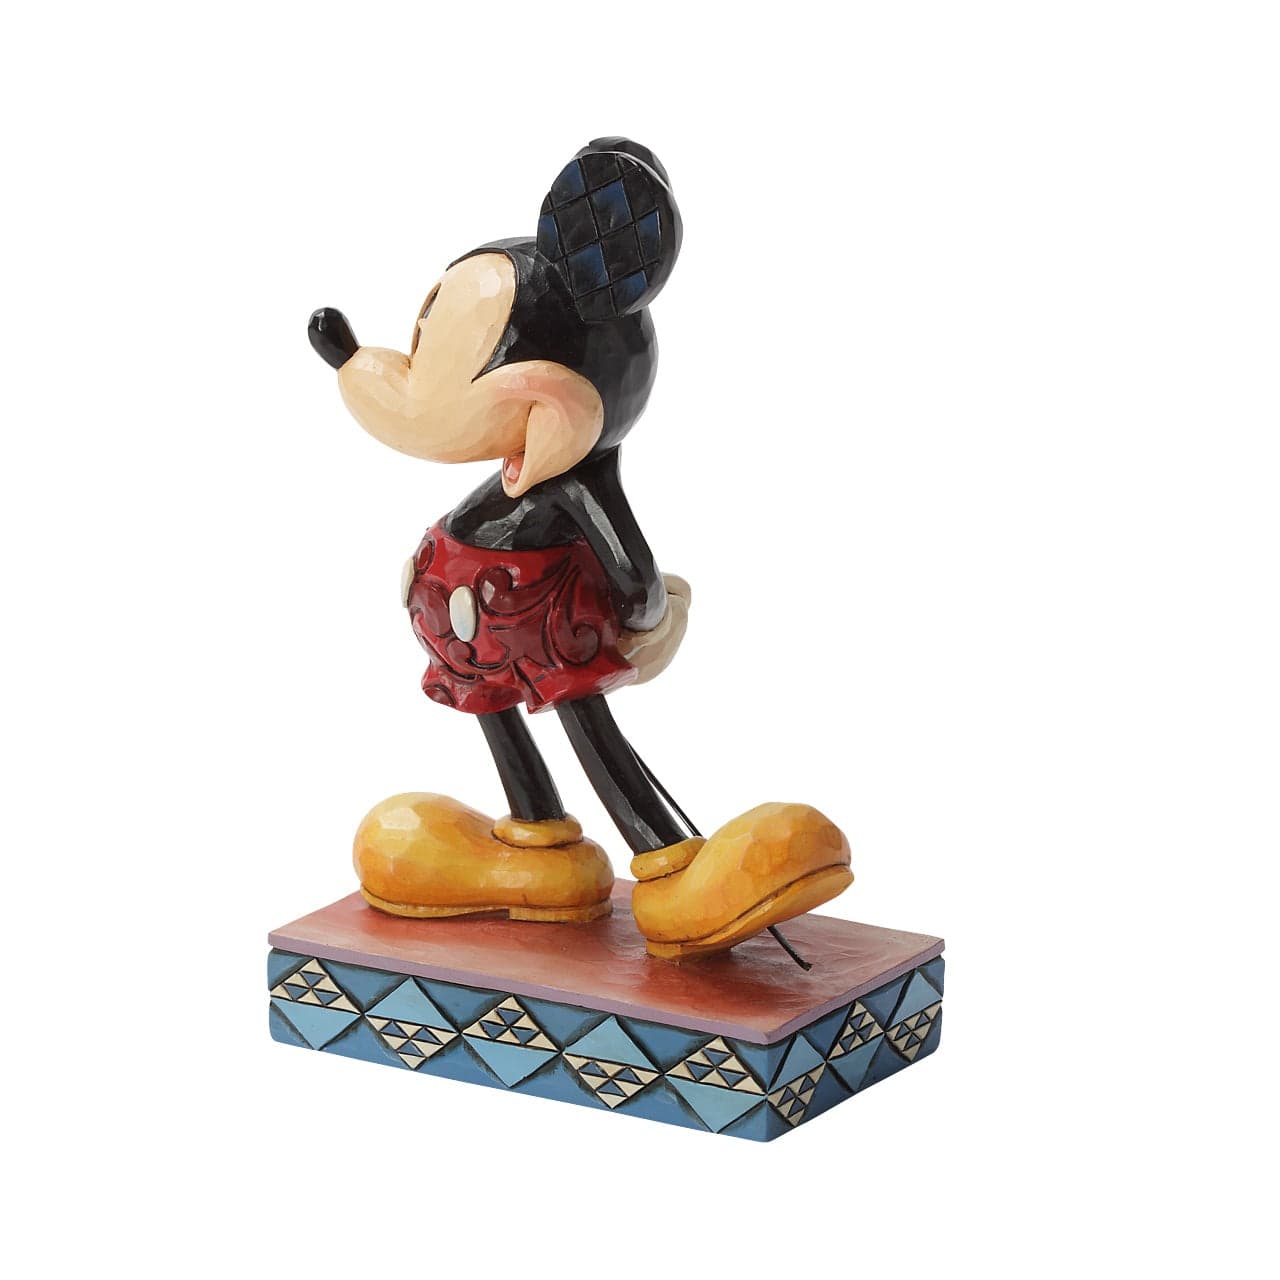 Enesco Disney Ornament Disney Traditions Figurine -The Original (Mickey Mouse Figurine)